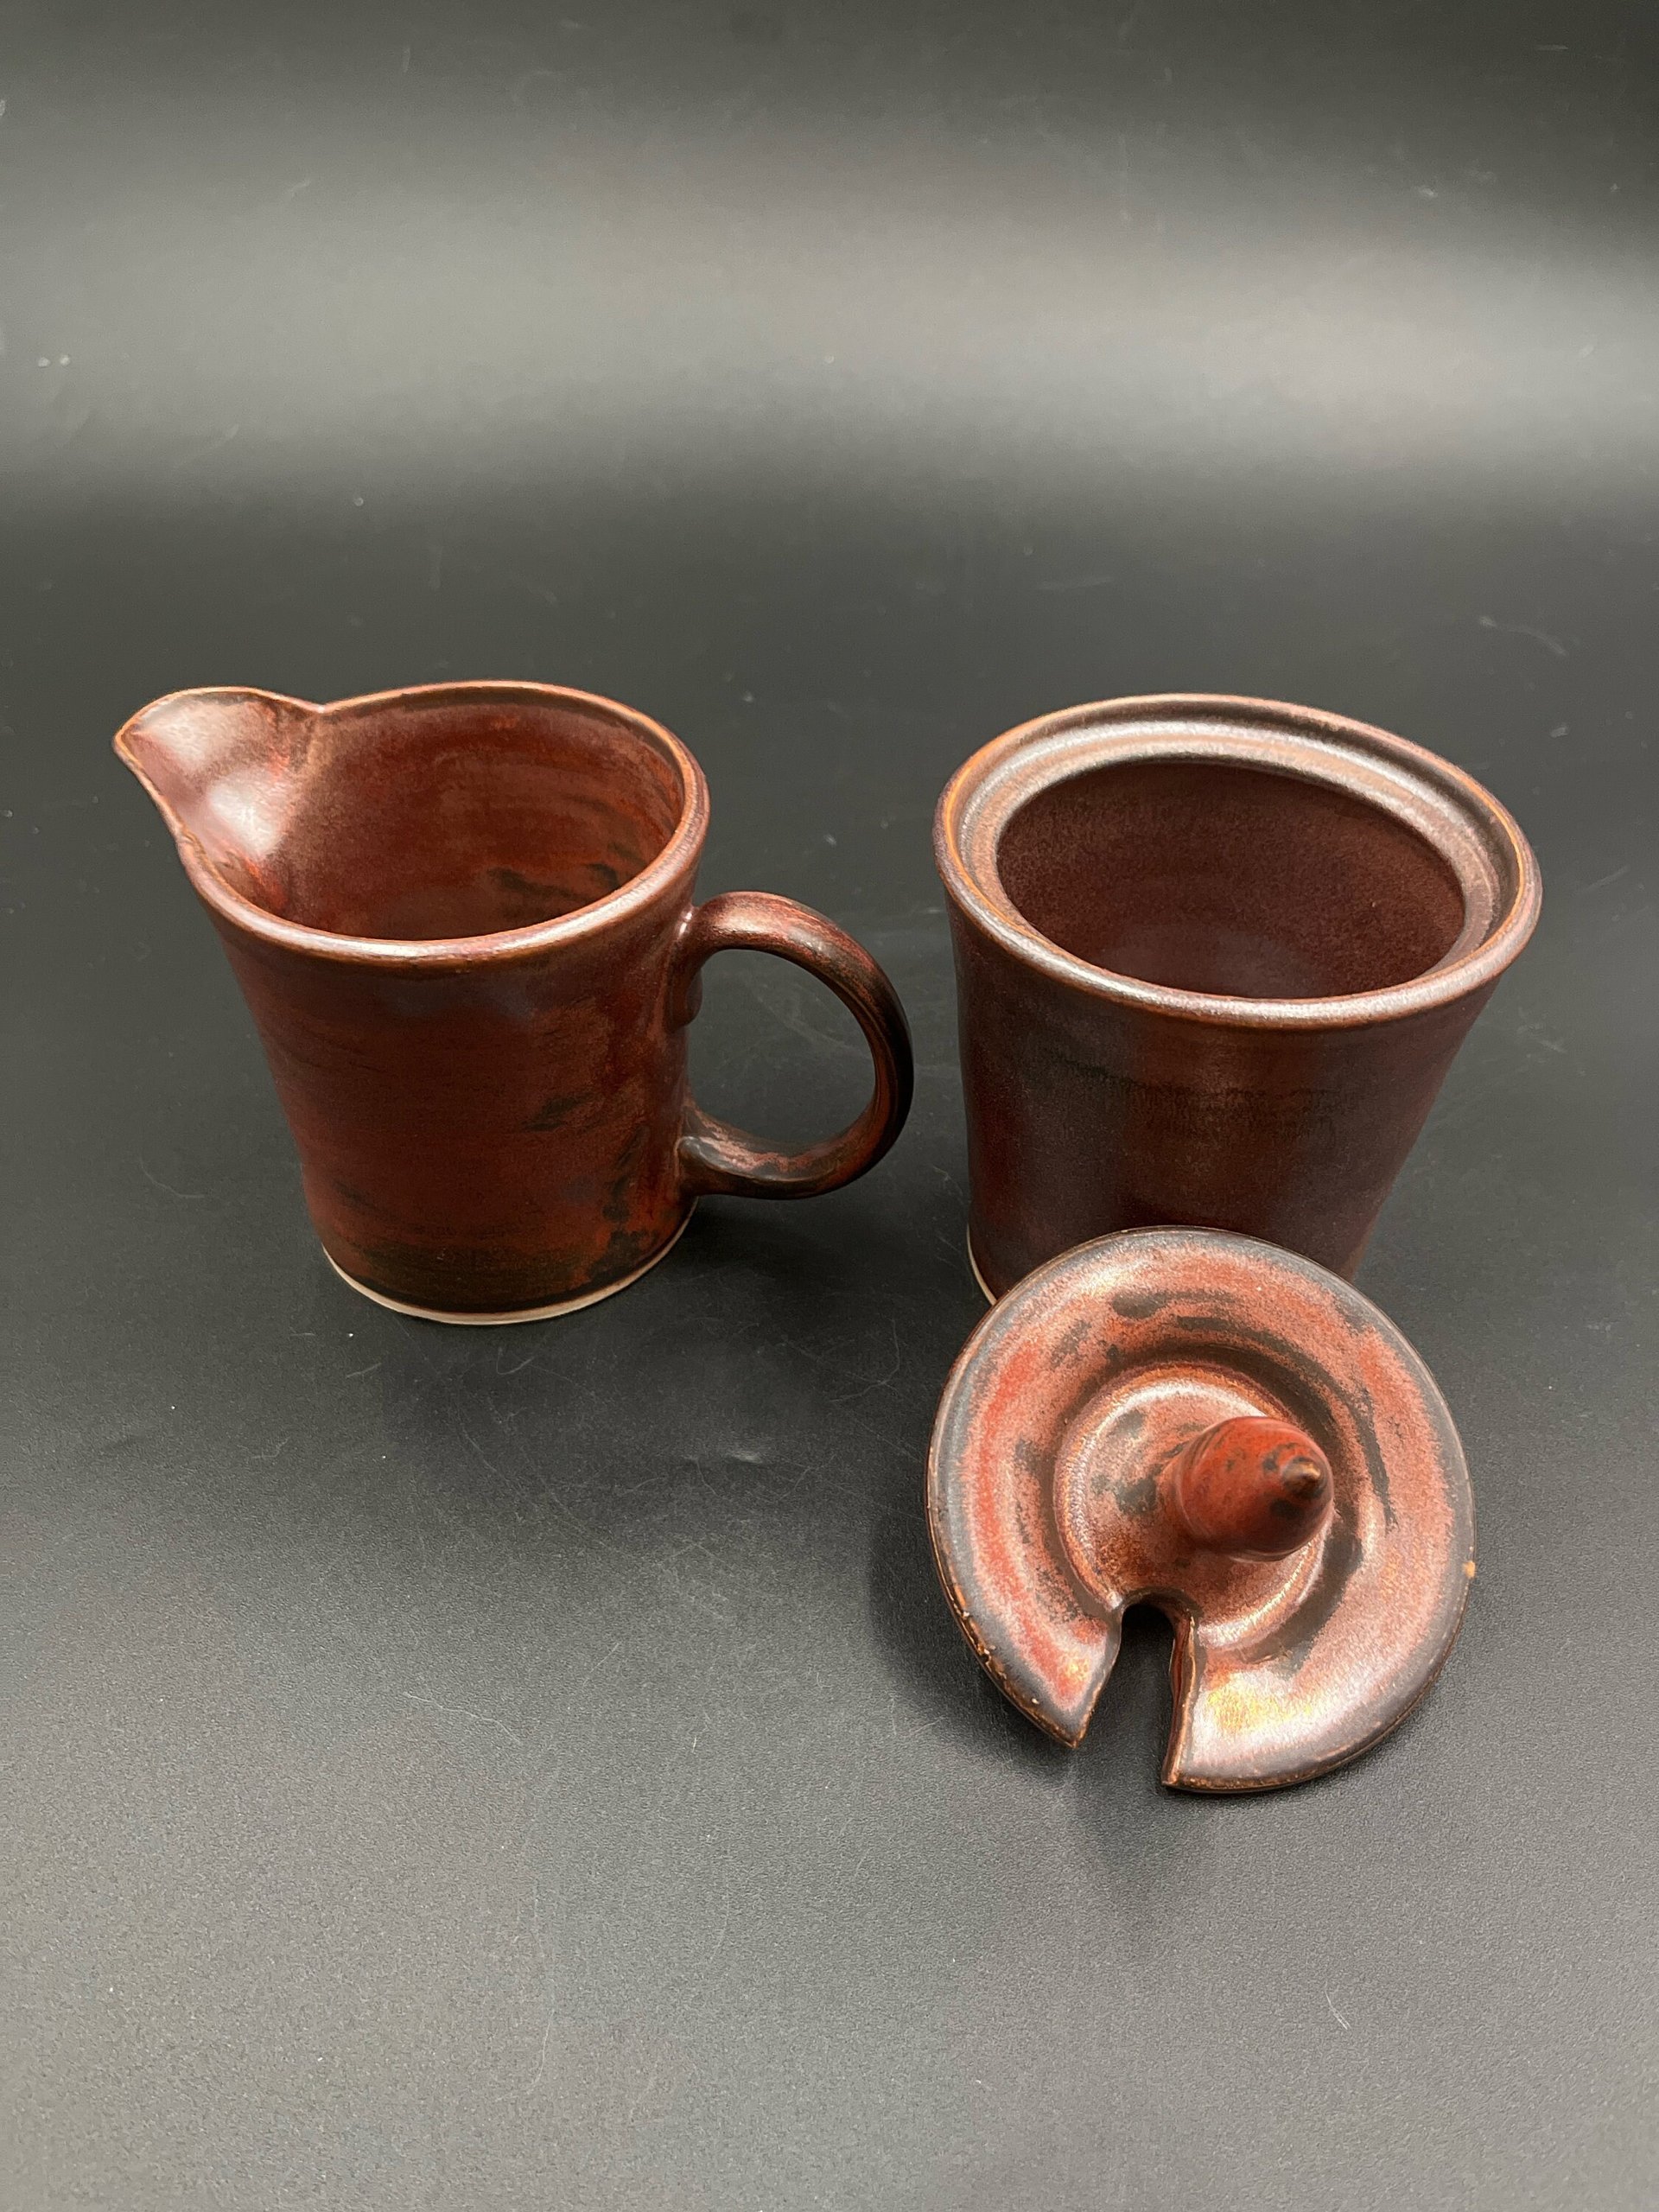 Handmade Copper Ceramic Cream and Sugar Set